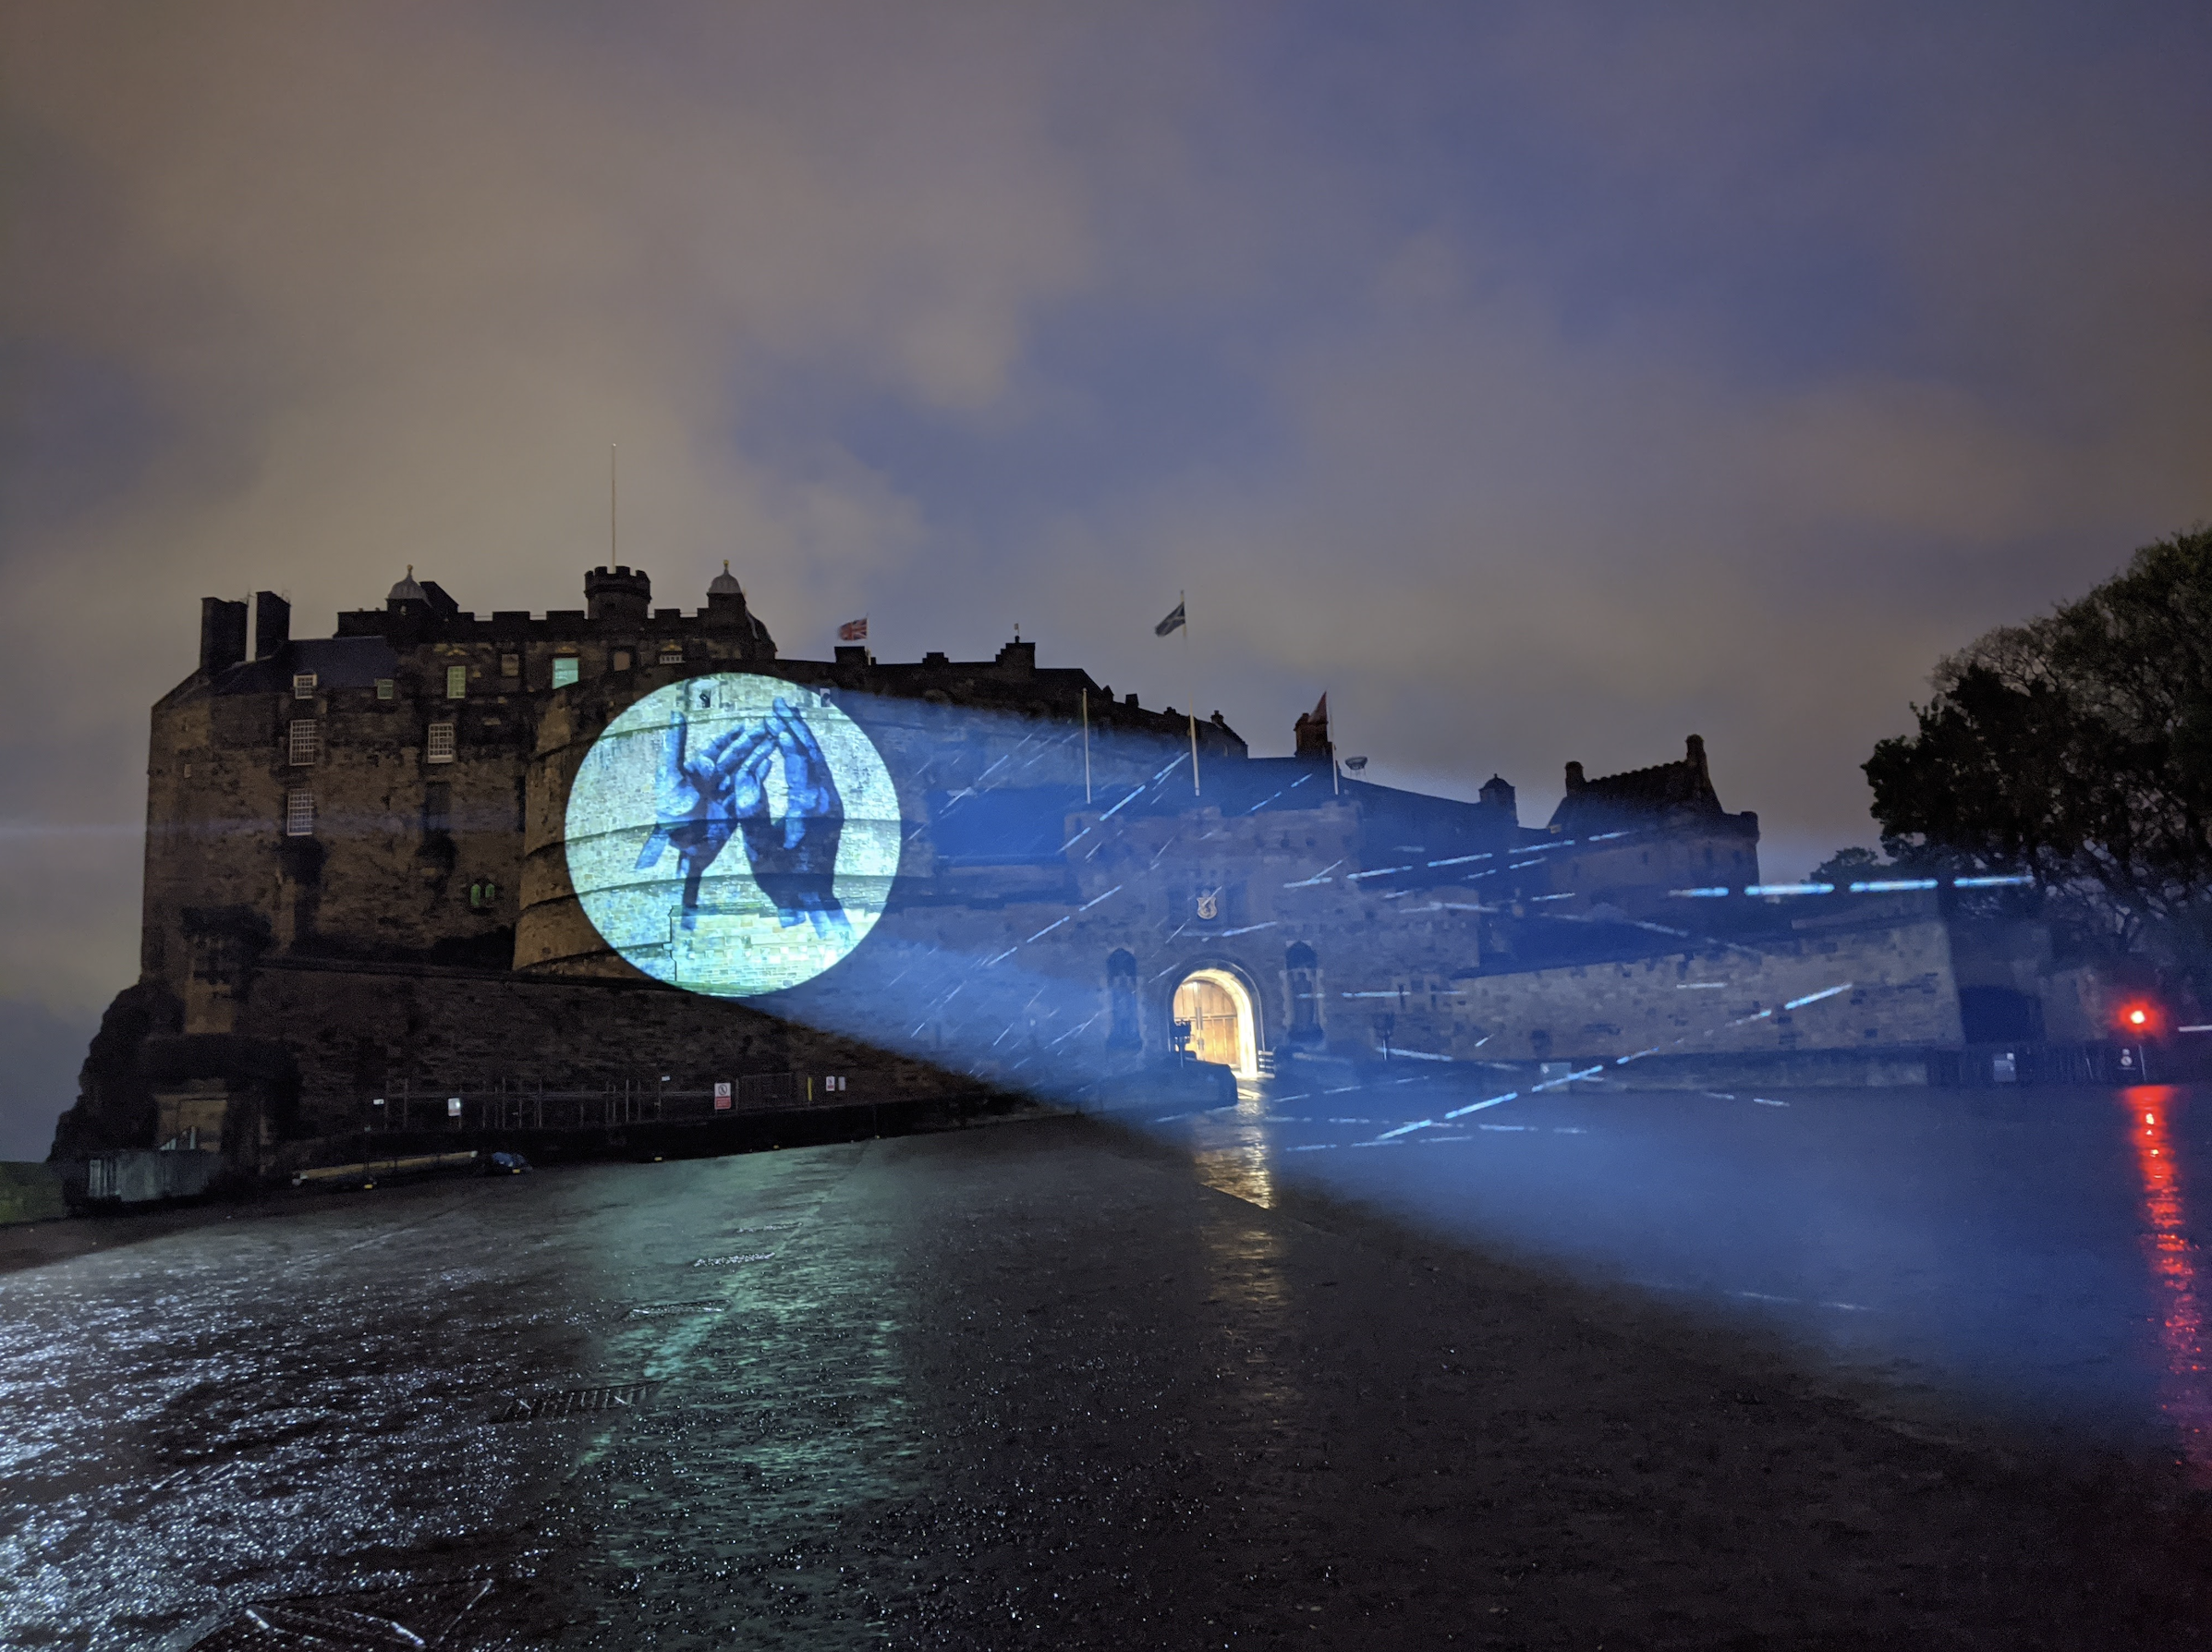  Edinburgh Castle projection   www.iclapfor.com  